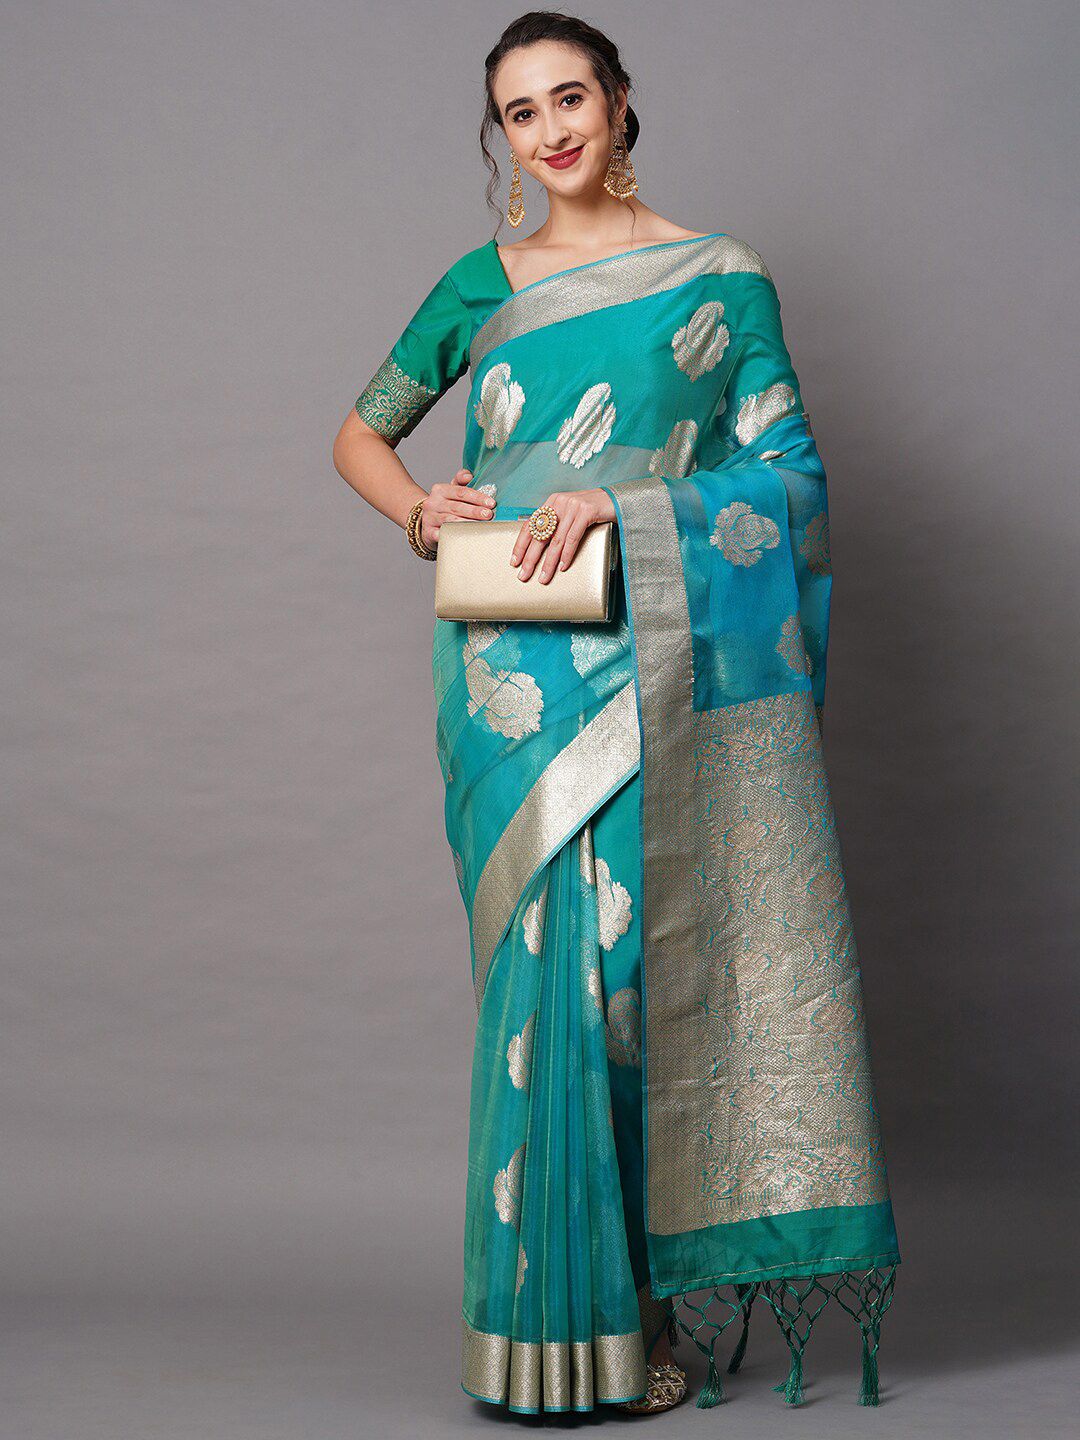 Mitera Teal & Silver-Toned Woven Design Organza Banarasi Saree Price in India